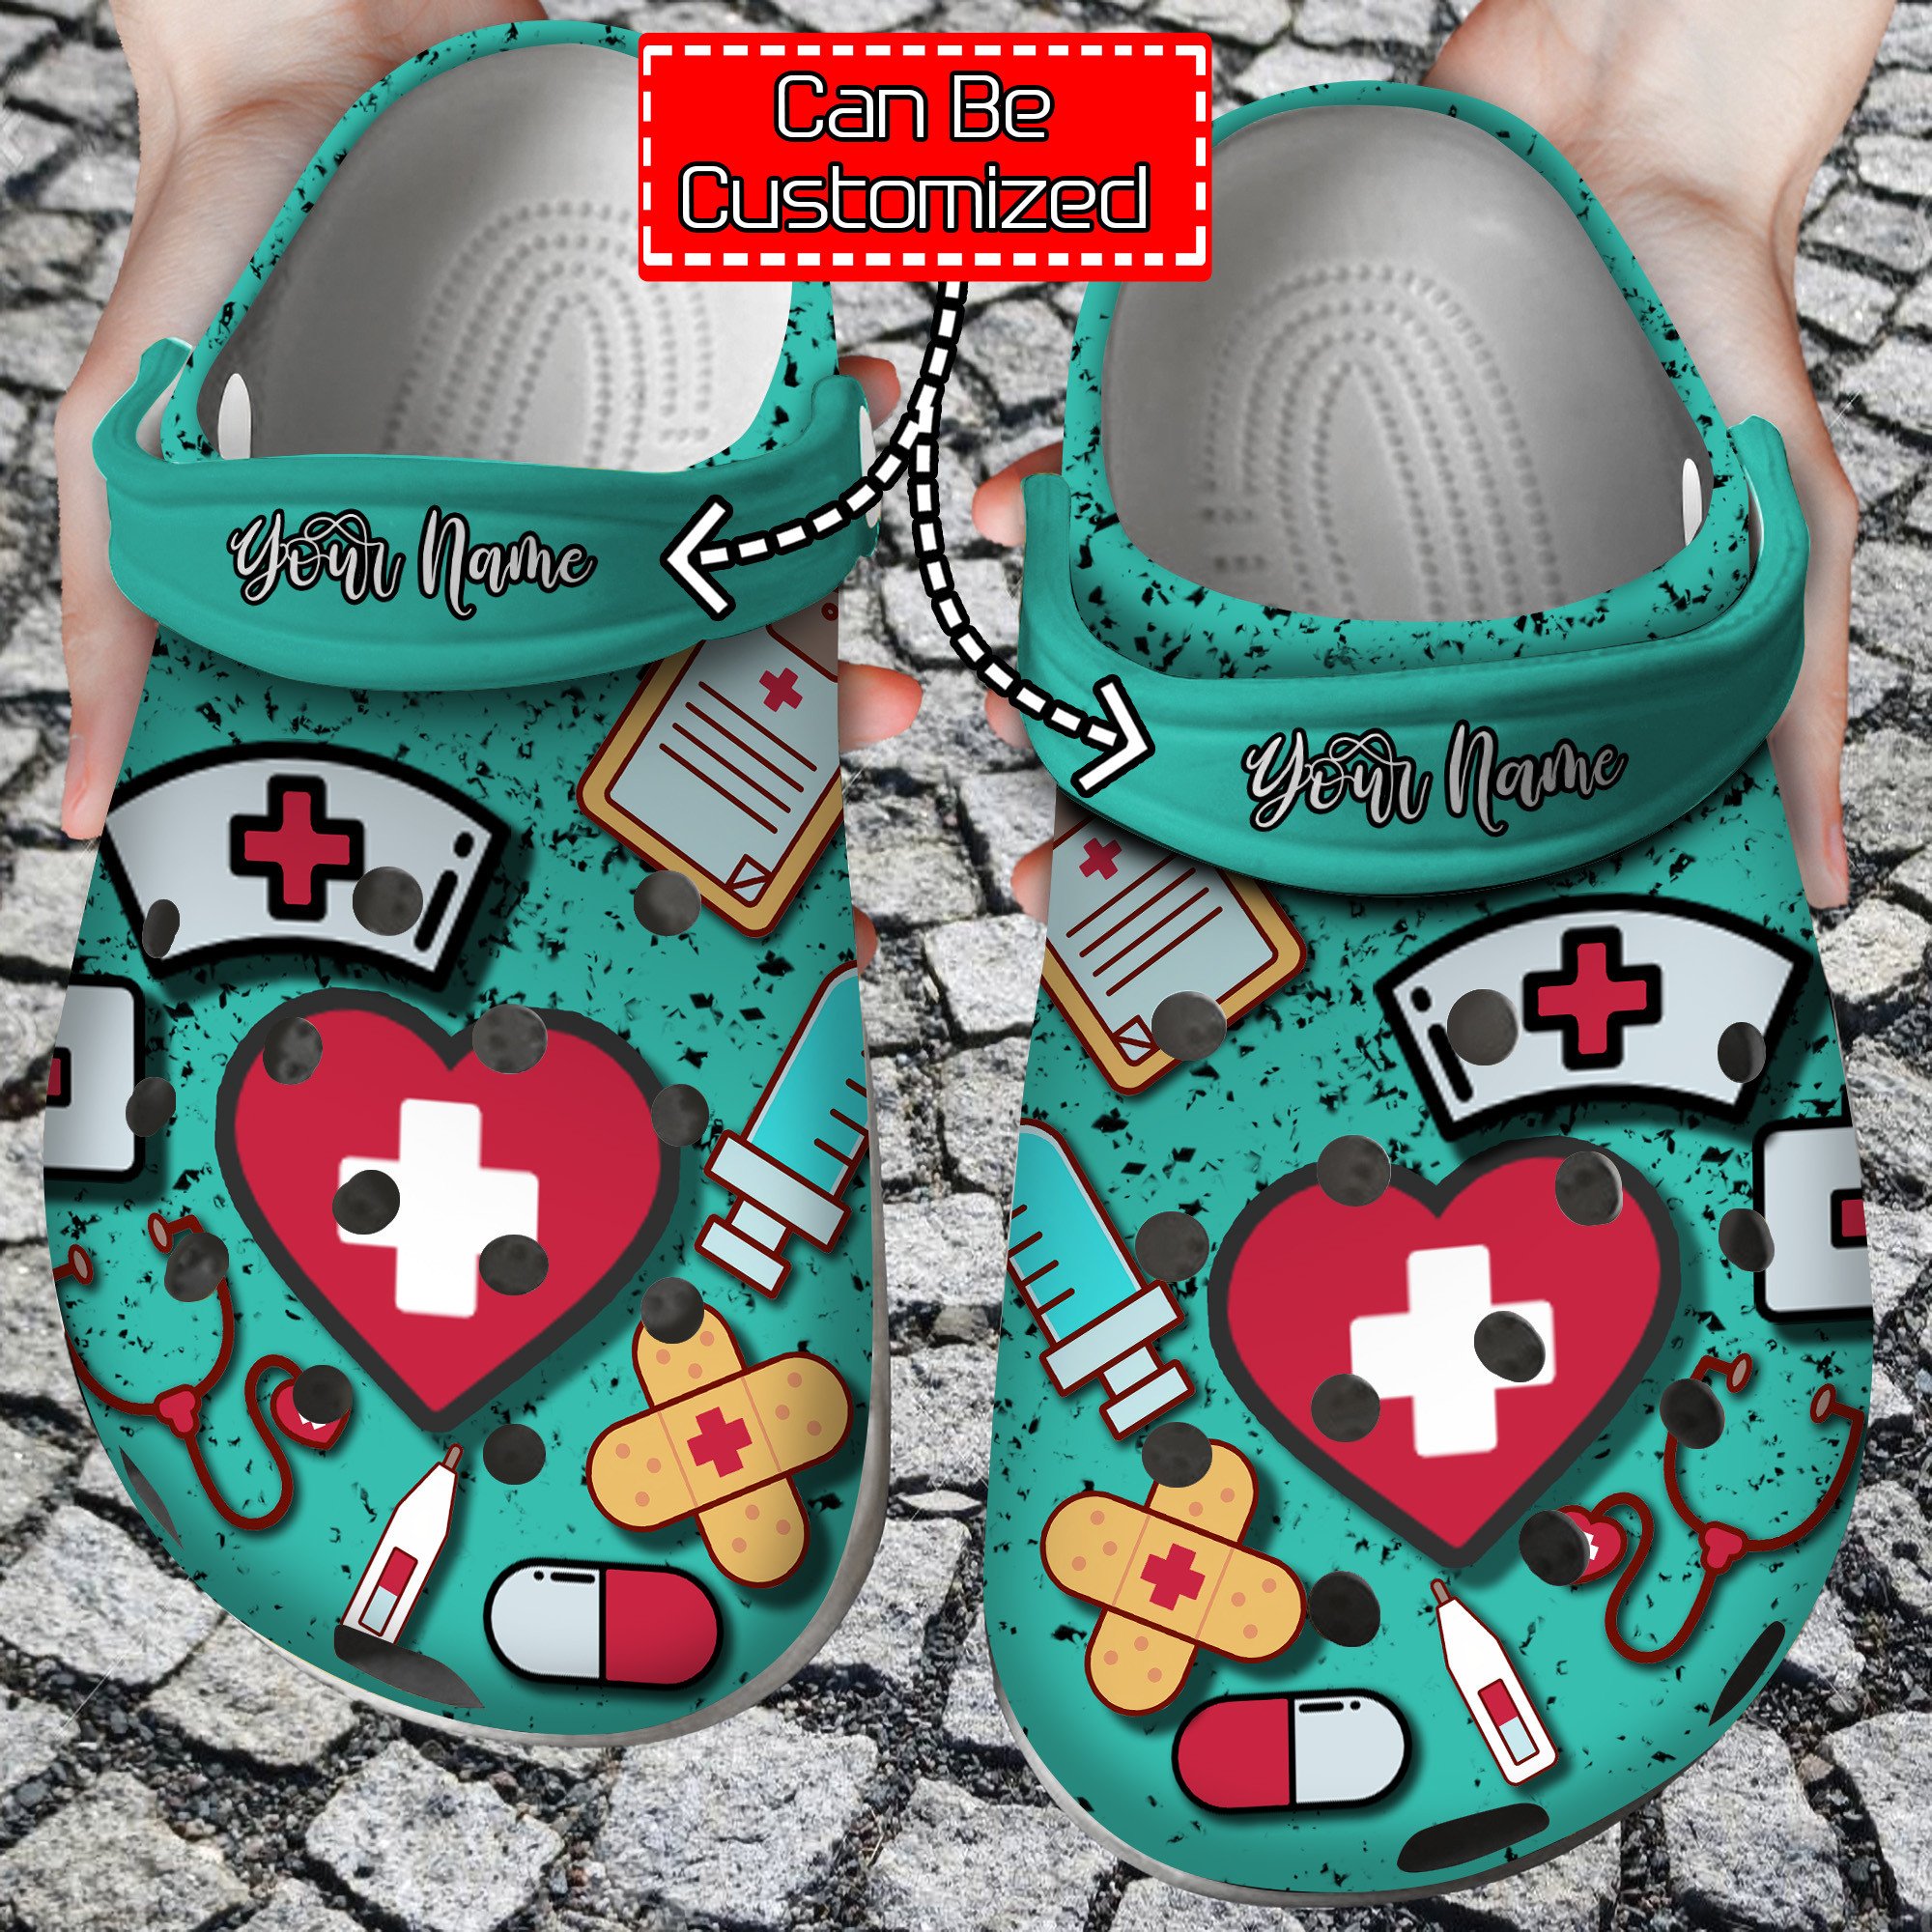 Nurse Crocs – Personalized Clogs Shoes With Symbols – Justbeperfect Shop